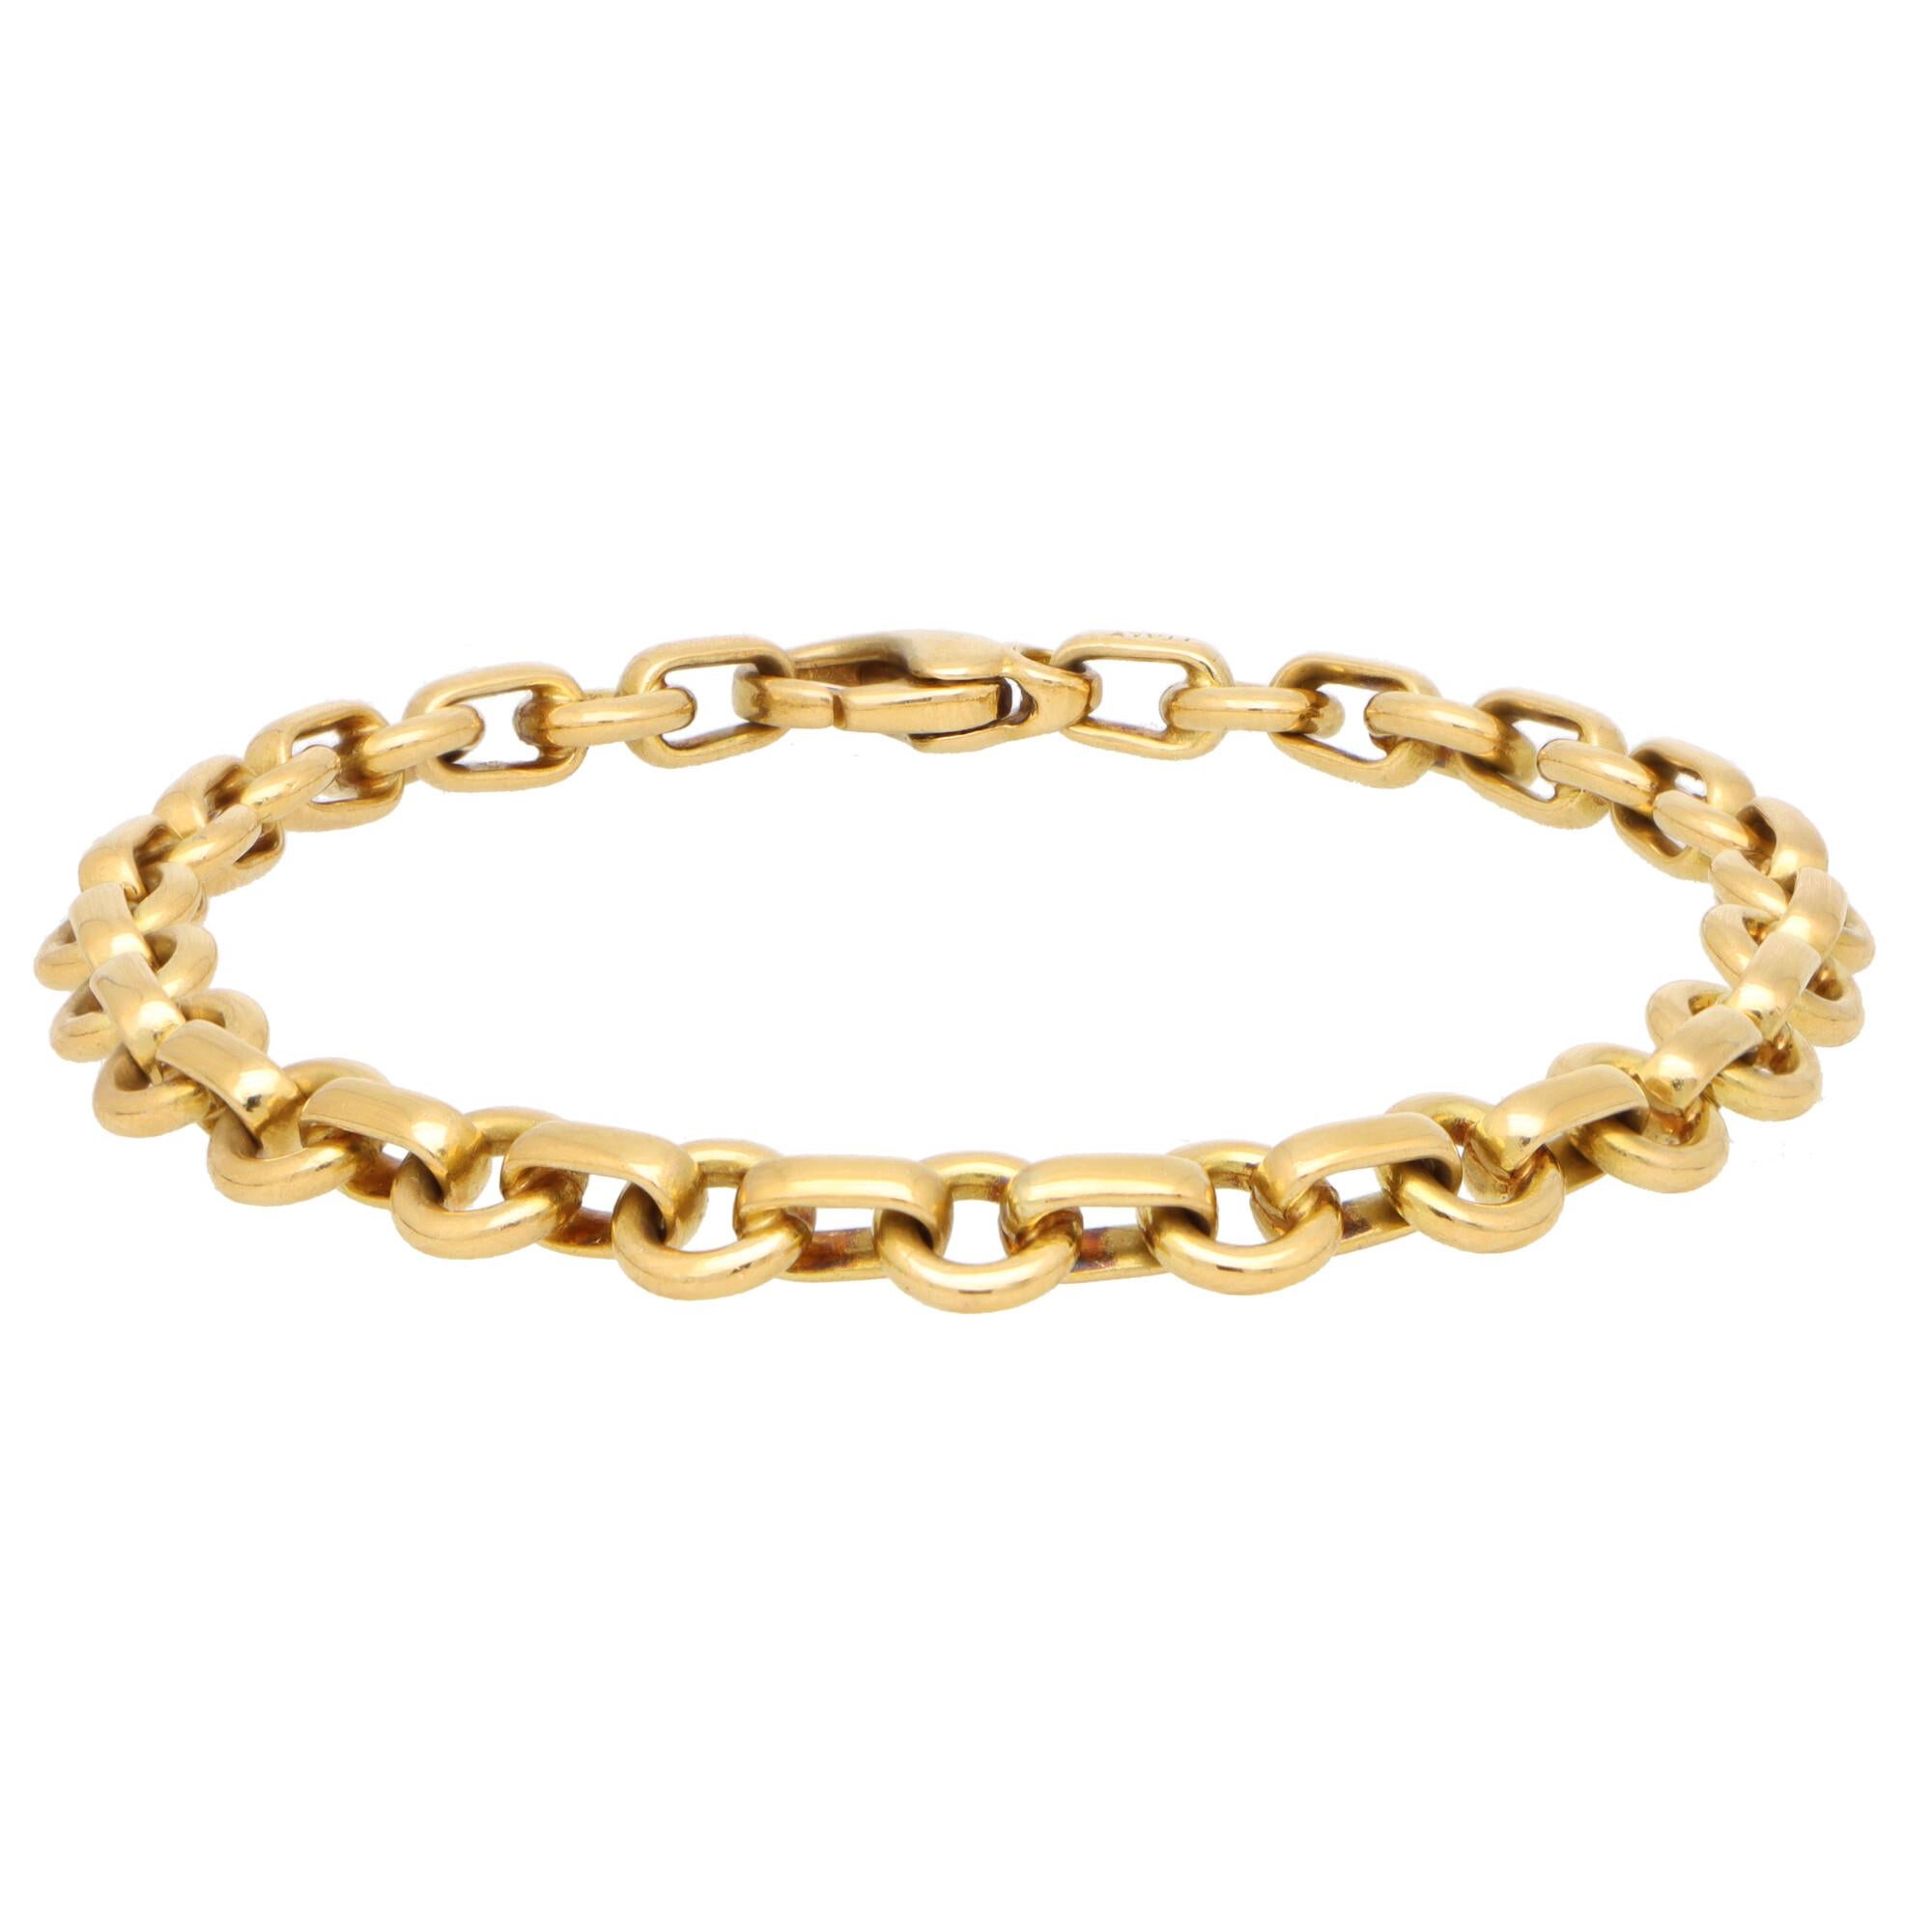 Modern Vintage Tiffany & Co. Chain Link Bracelet Set in 18k Yellow Gold